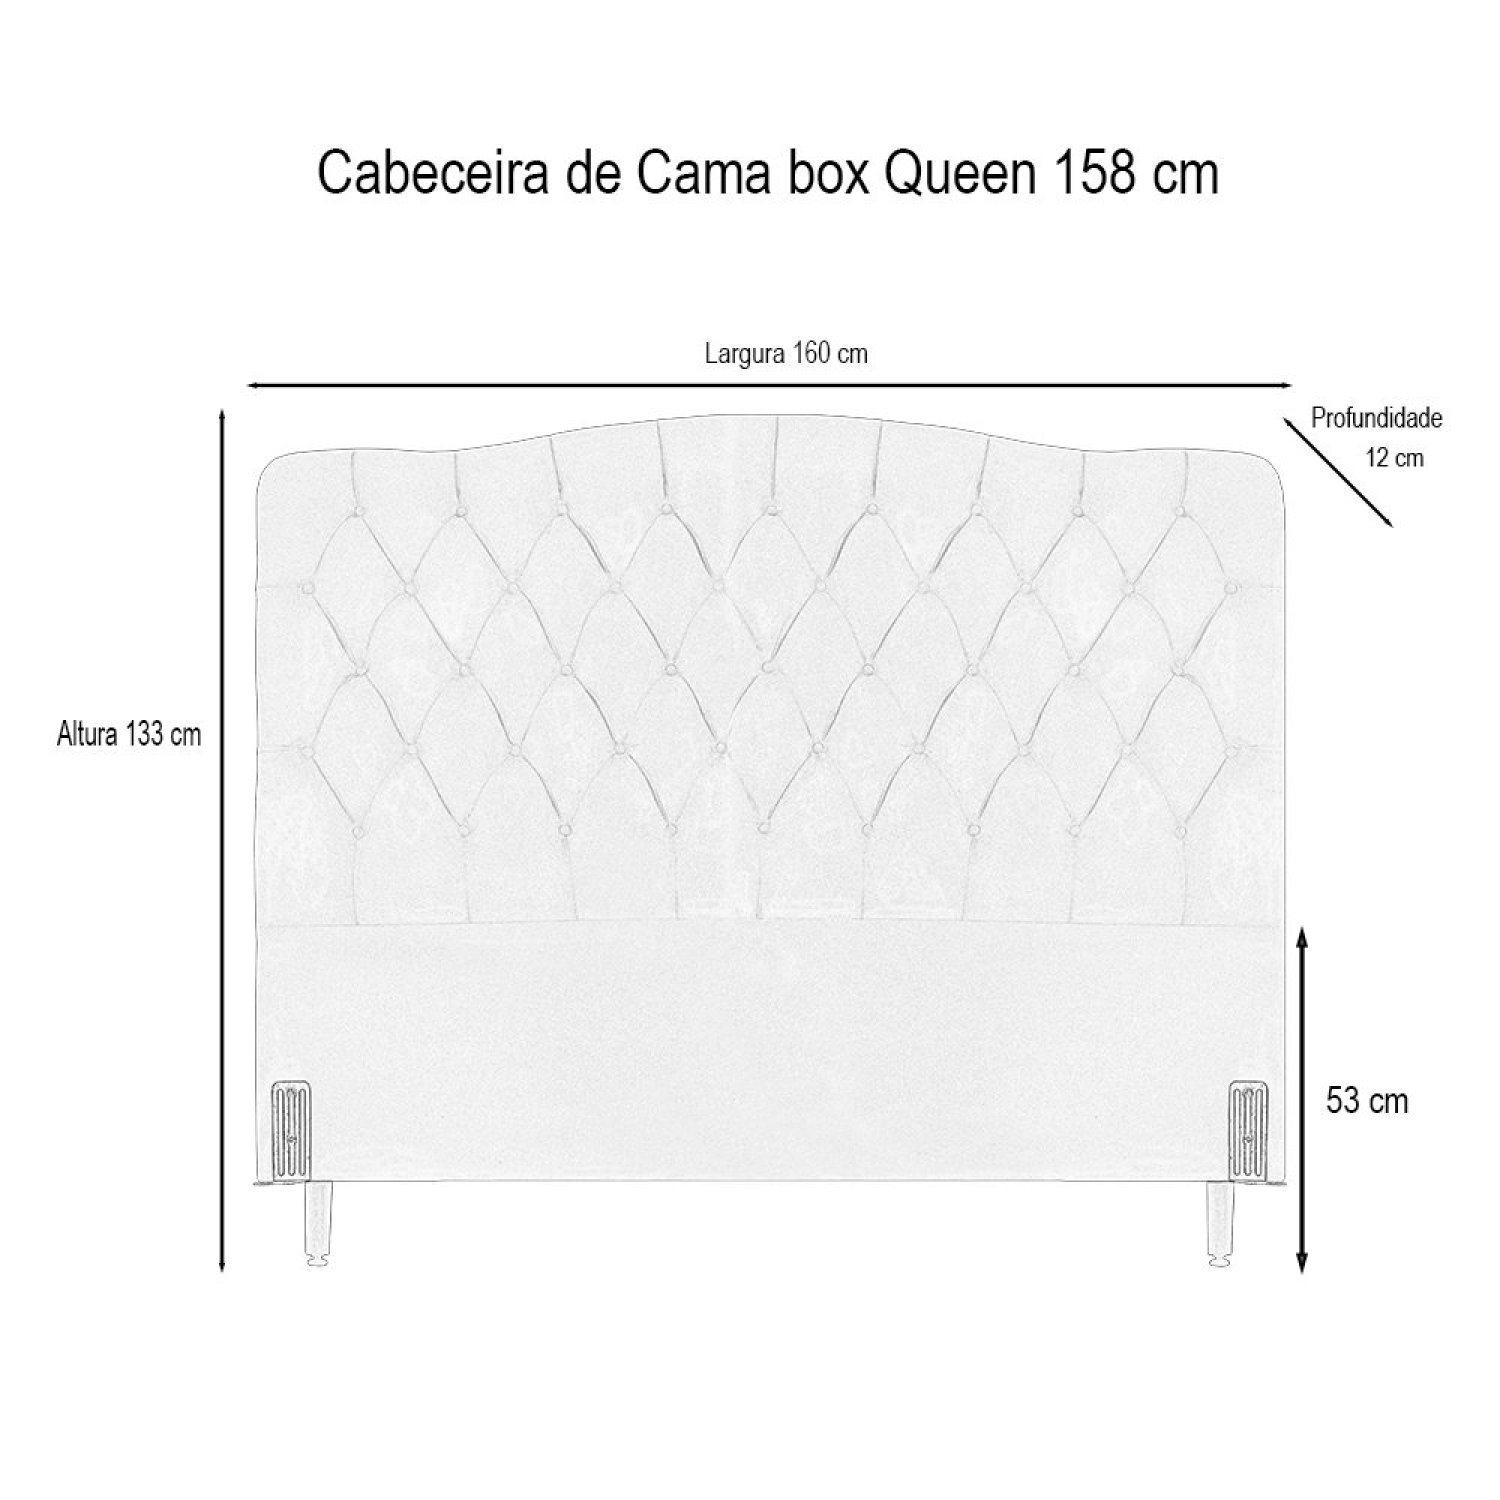 Cabeceira Dunas de Cama Box Queen 158 Cm - 4